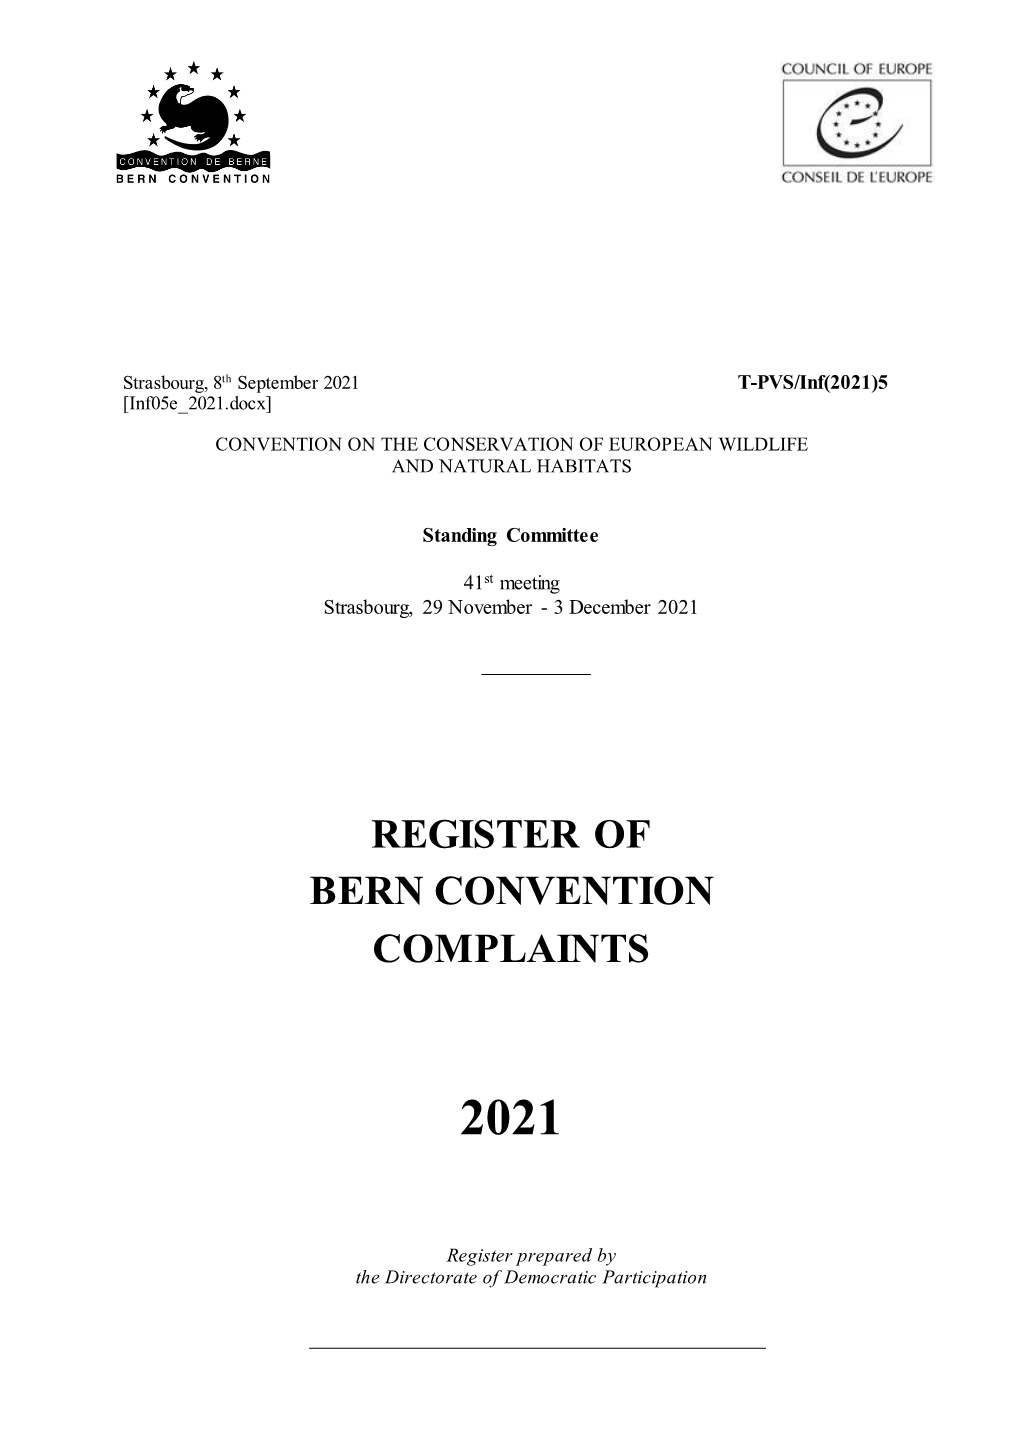 Register of Bern Convention Complaints